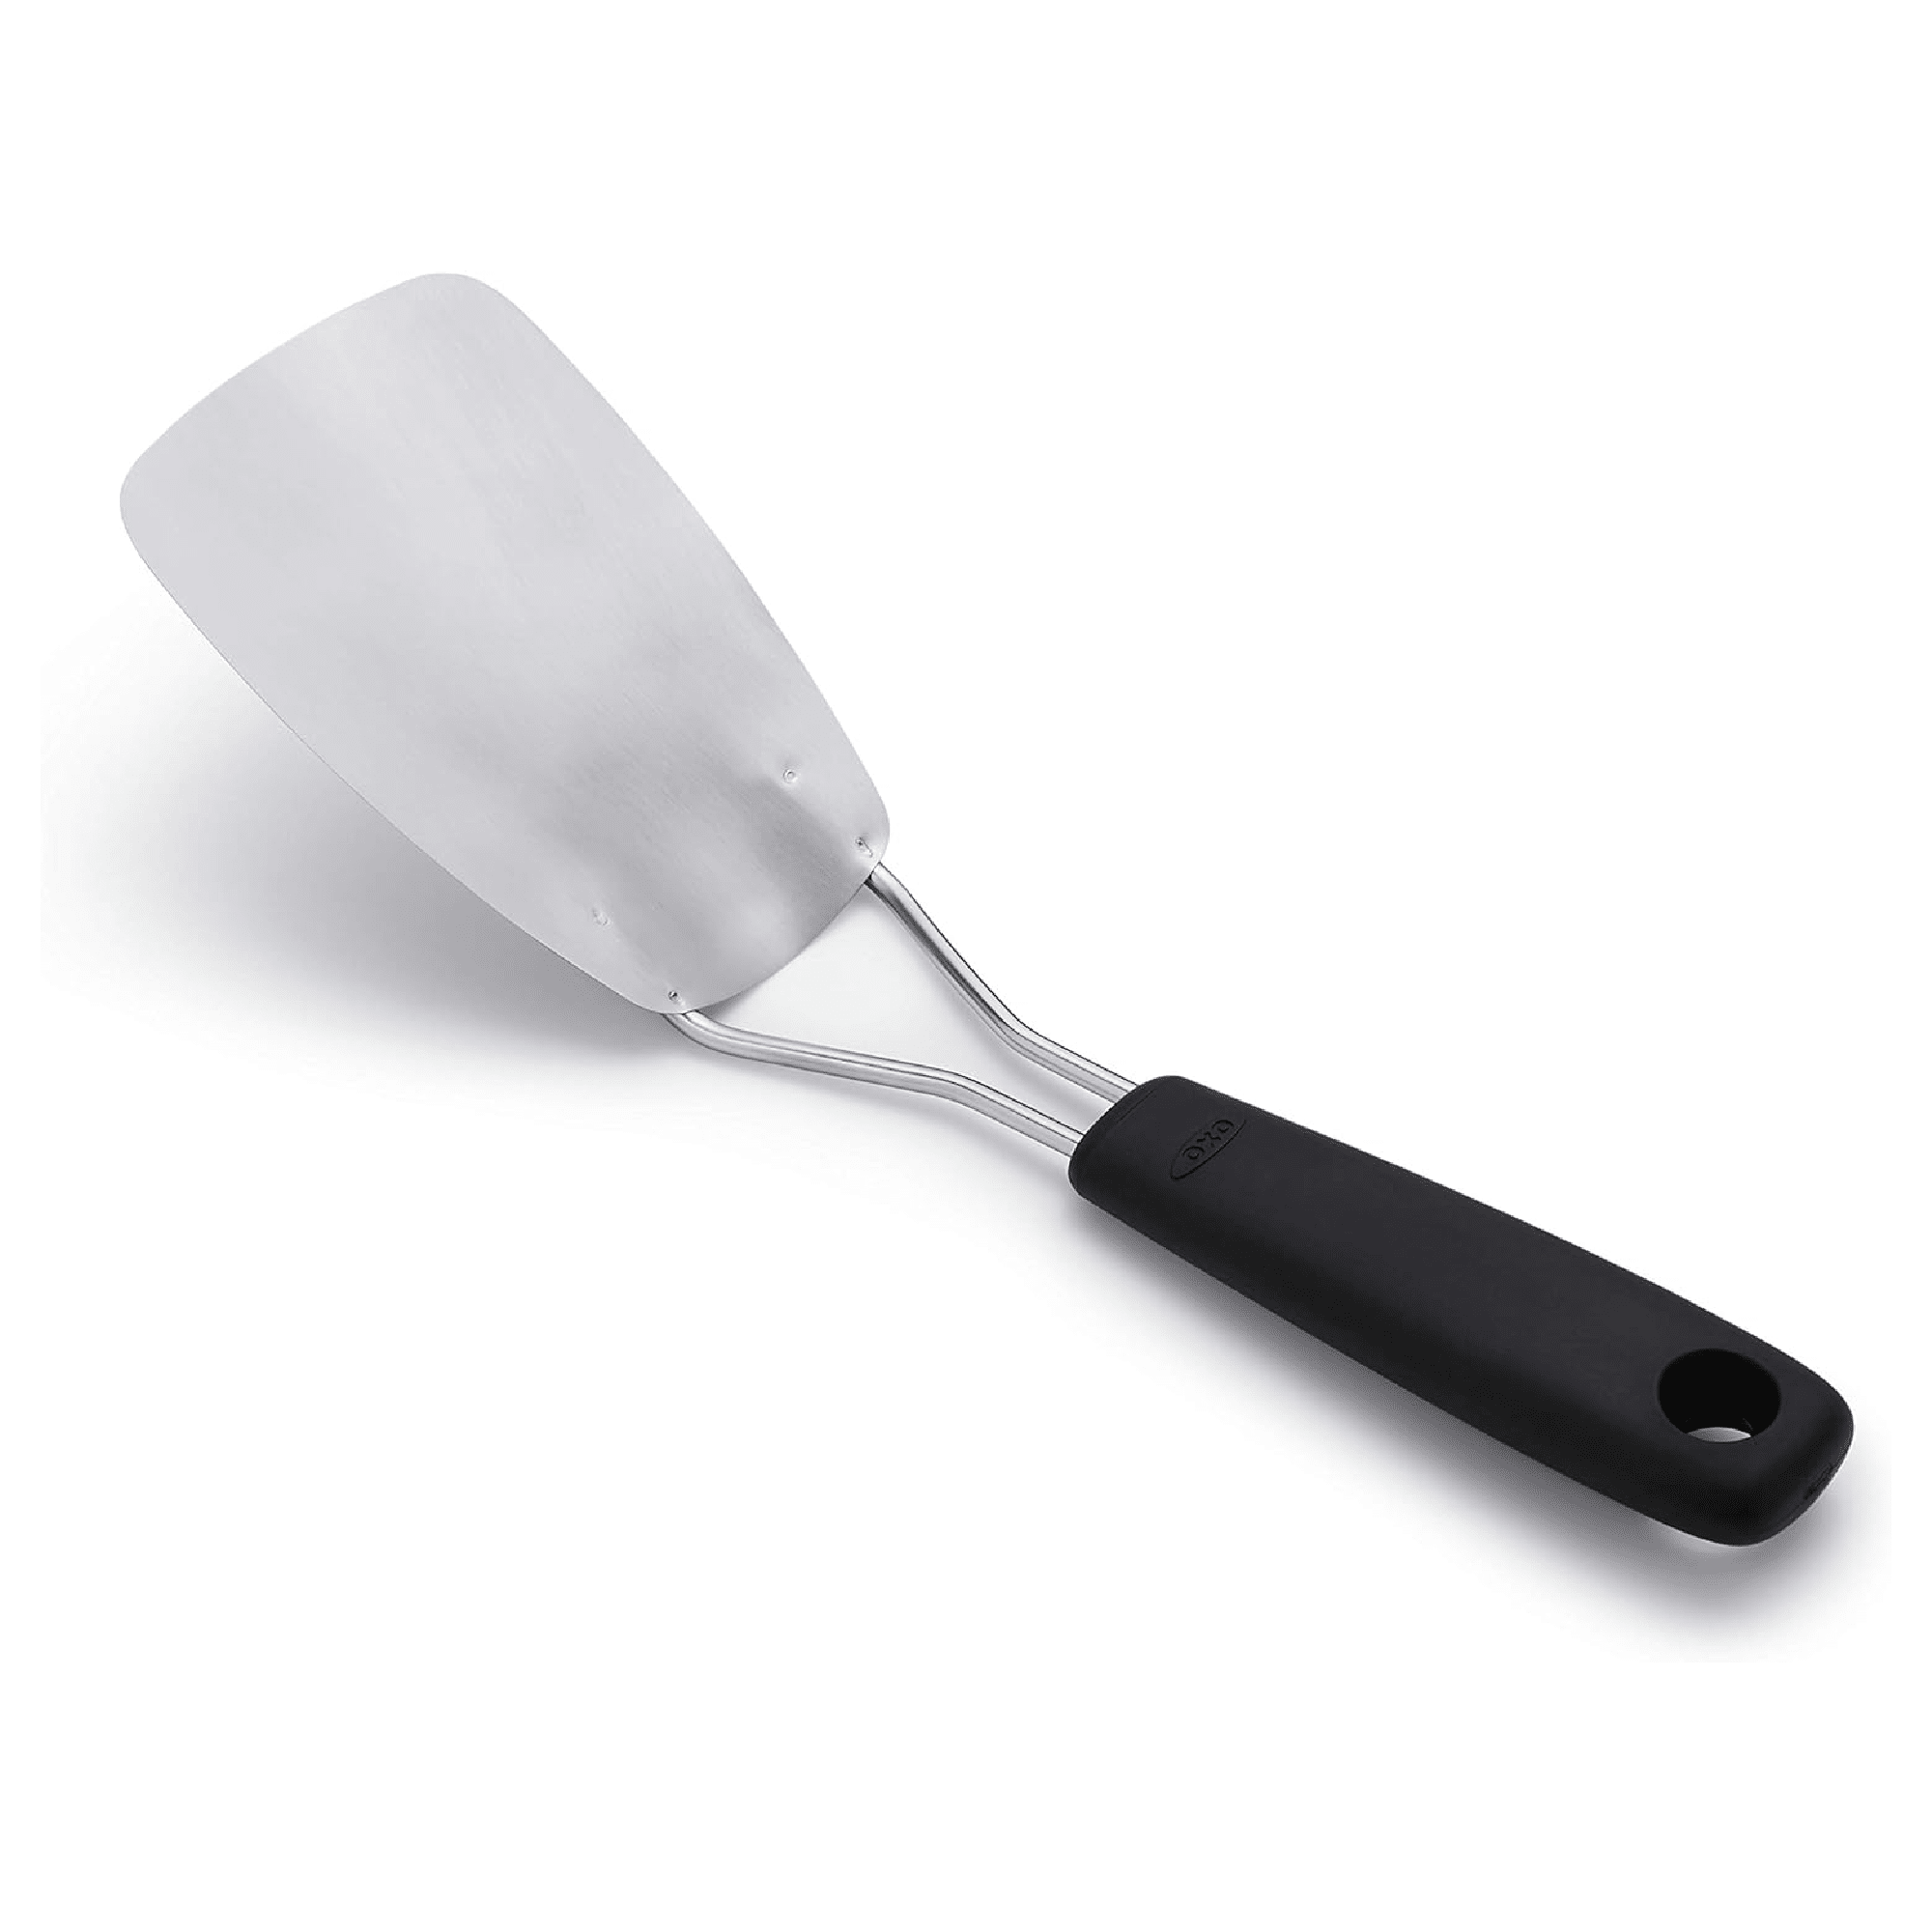 A metal cookie spatula.